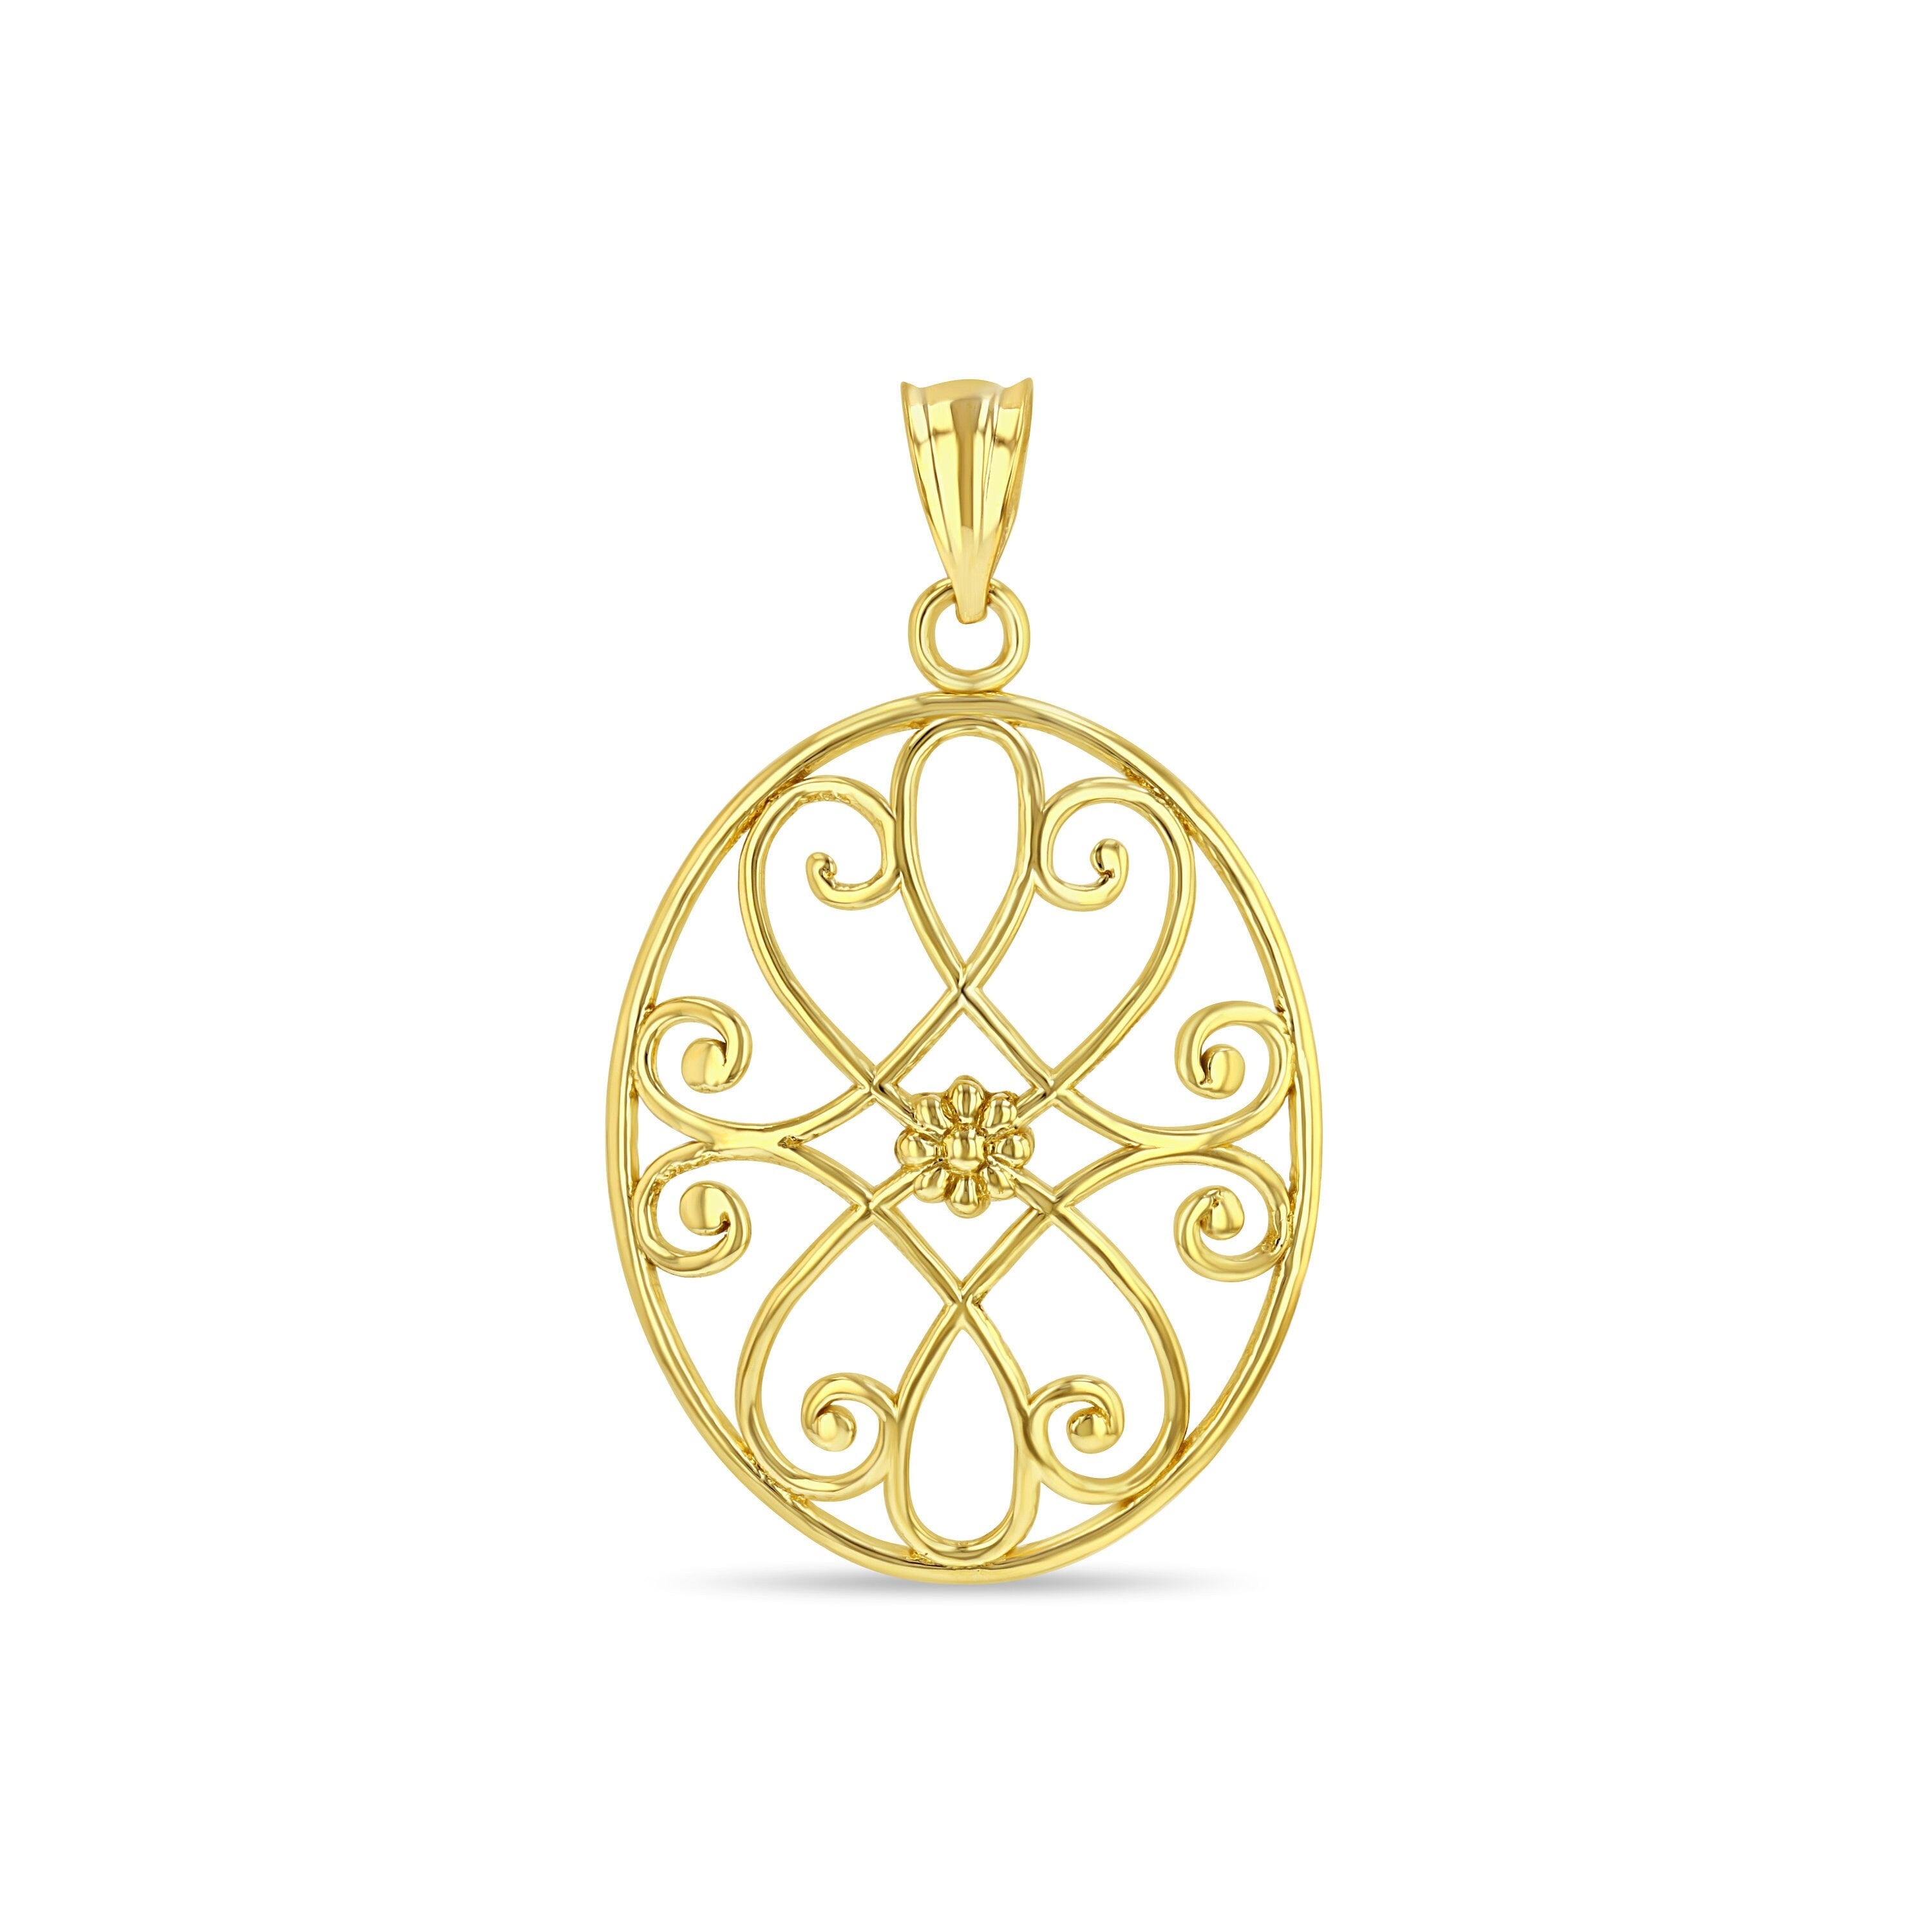 14k yellow gold filigree oval pendant